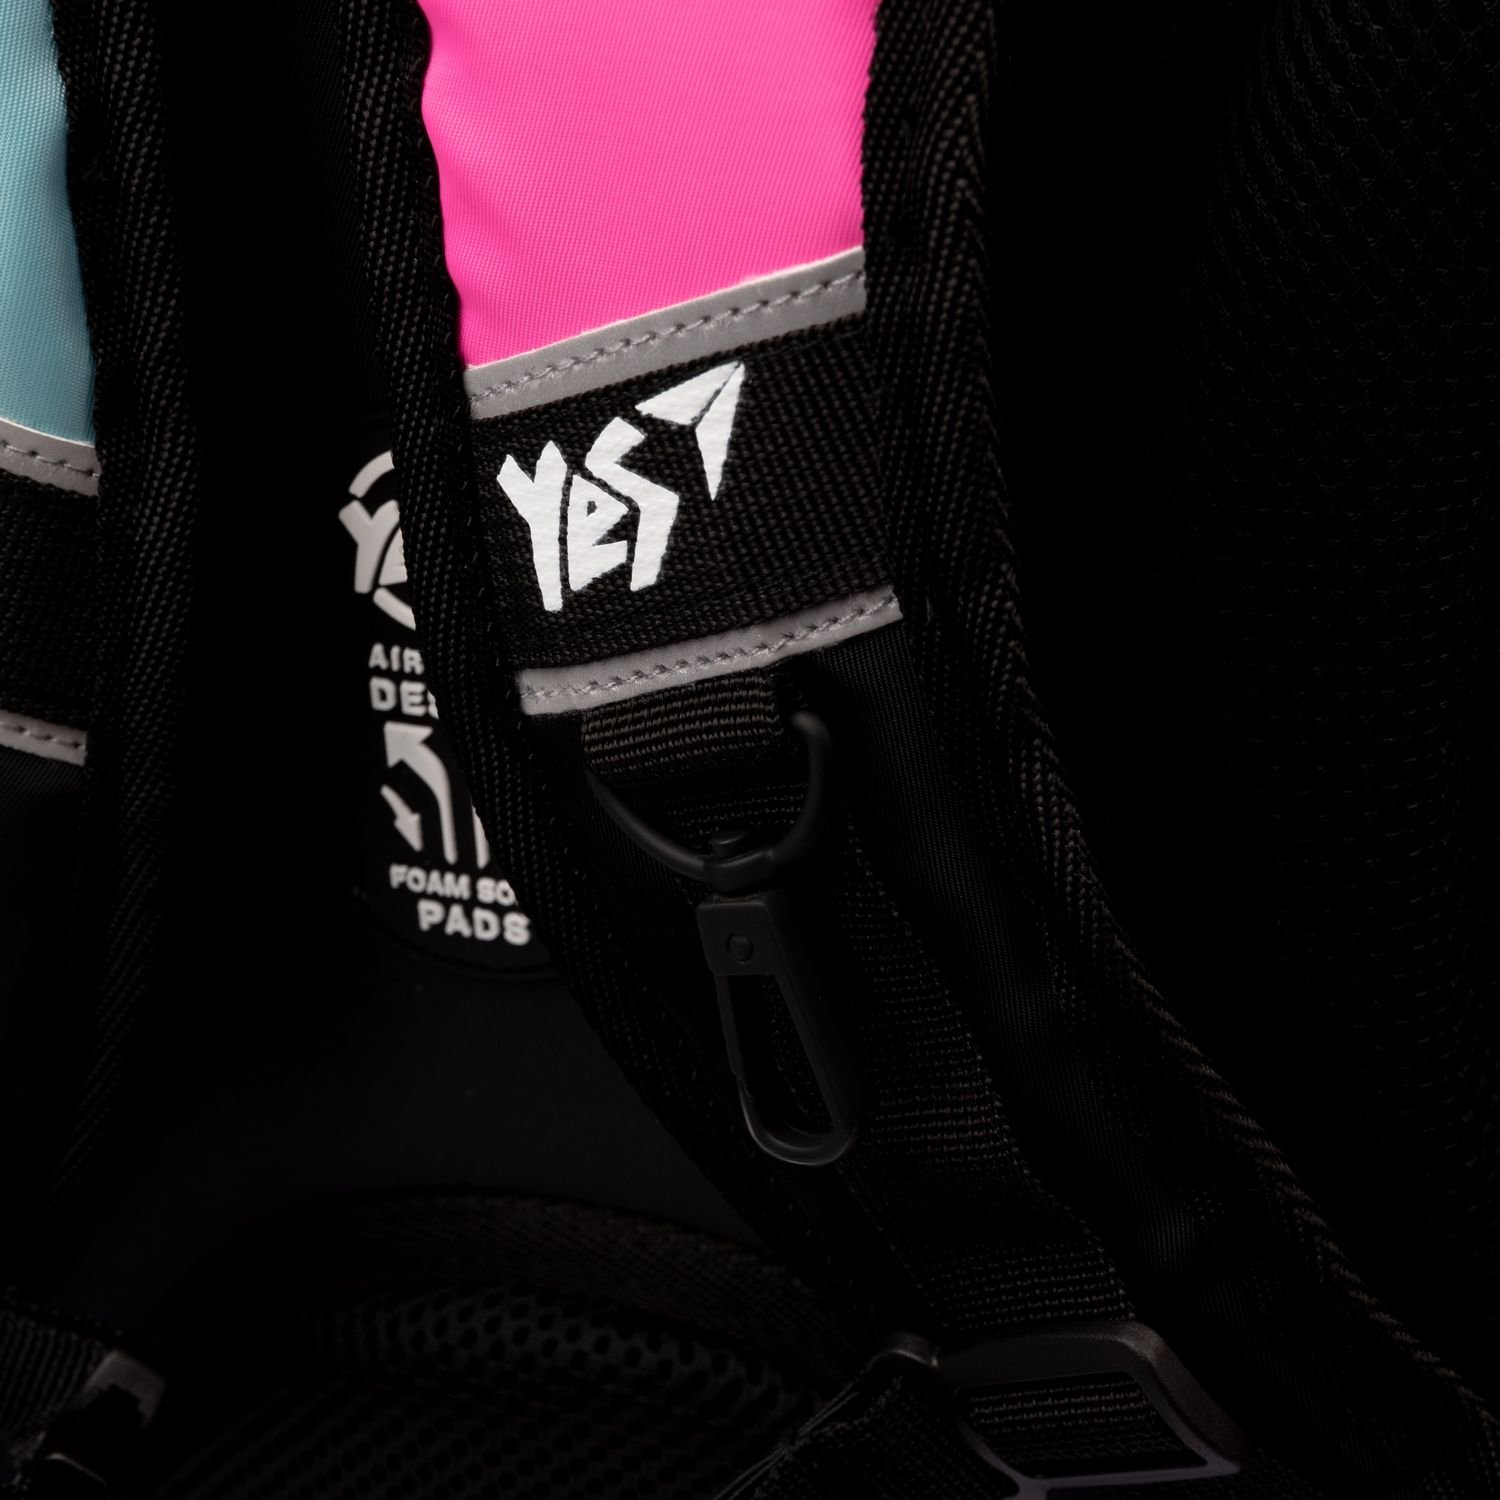 Рюкзак Yes TS-93 Andre Tan Space Pink, чорний з рожевим (559036) - фото 14